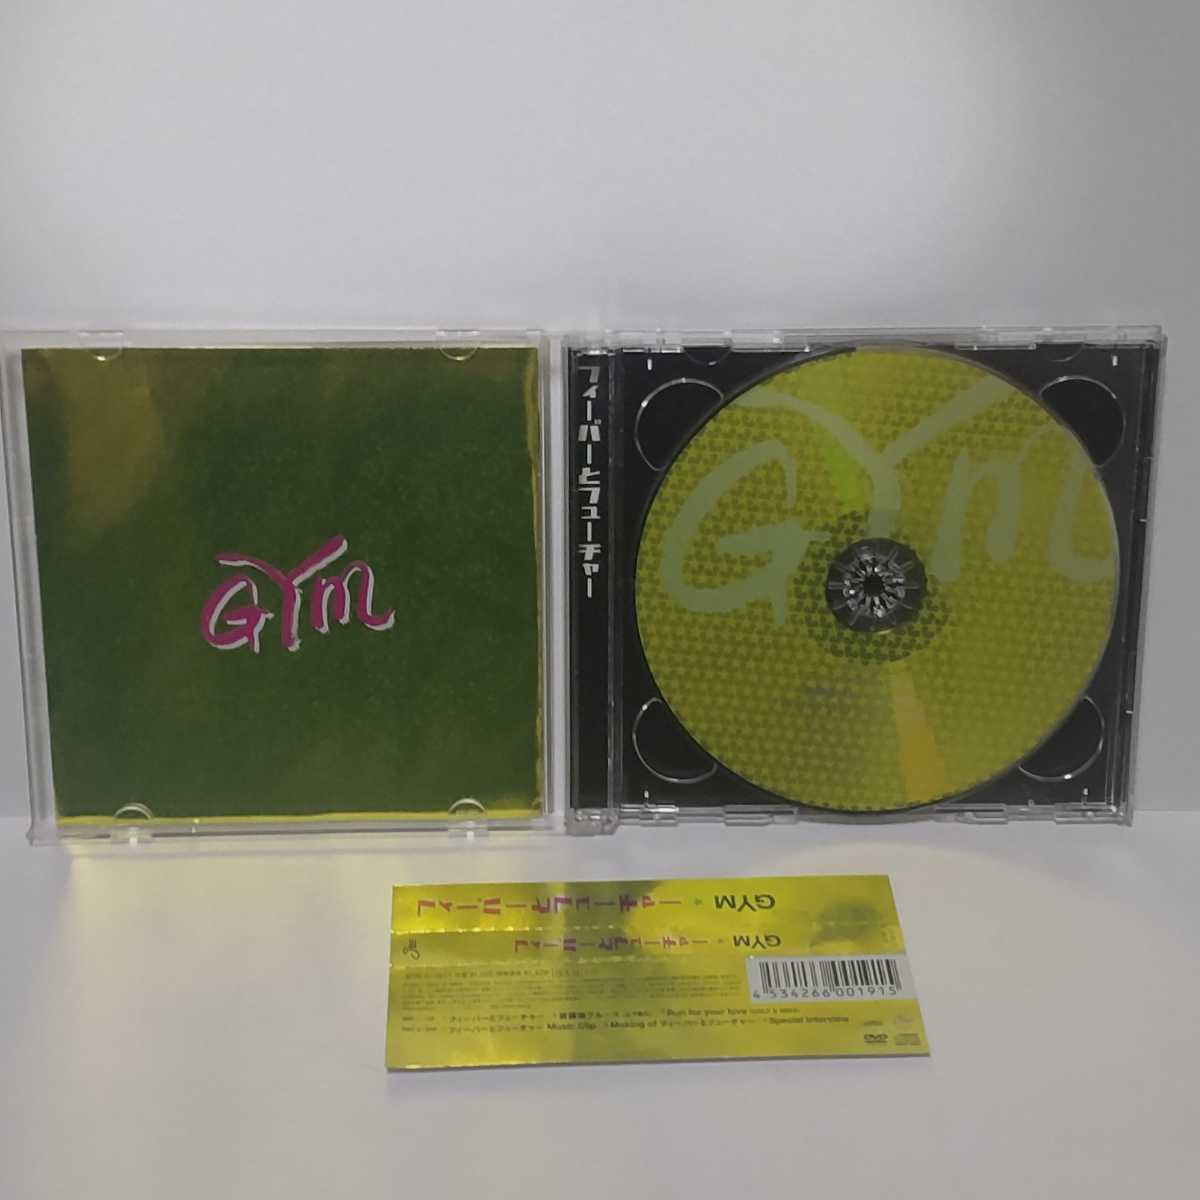 Yahoo!オークション - GYM 山下智久 フィーバーとフューチャー CD+DVD